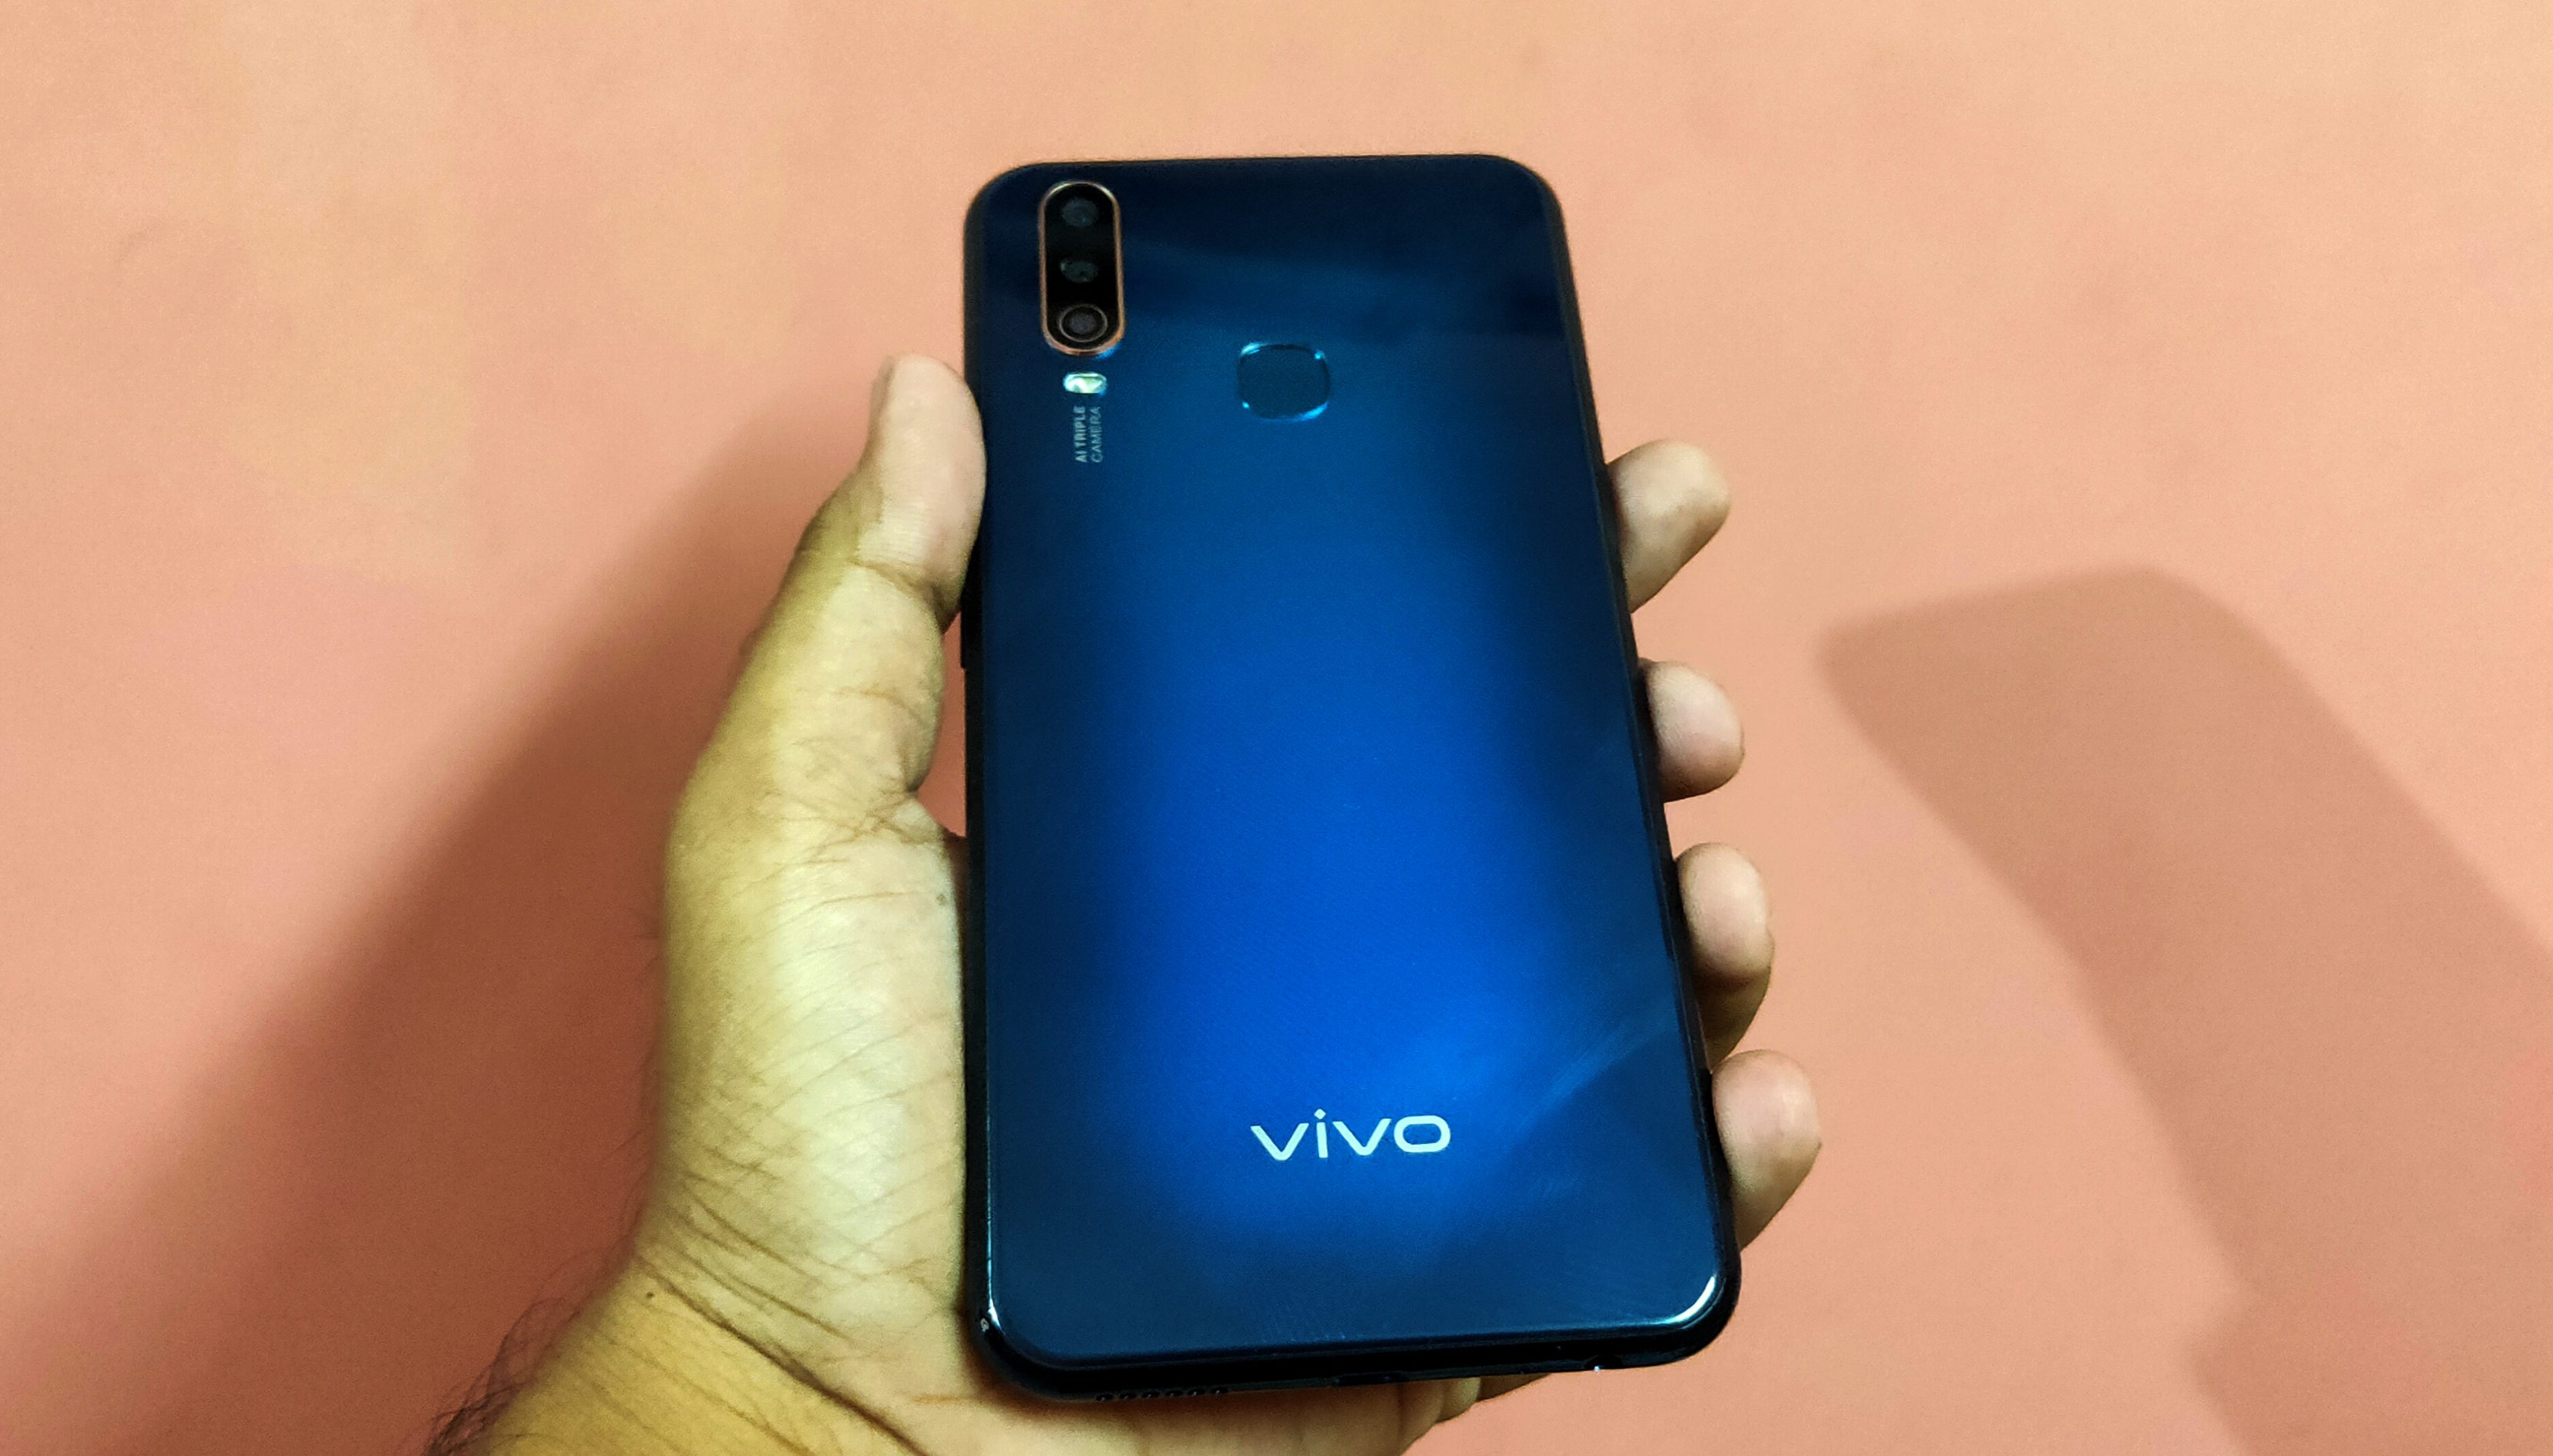 Vivo U10: A solid budget smartphone for millennials